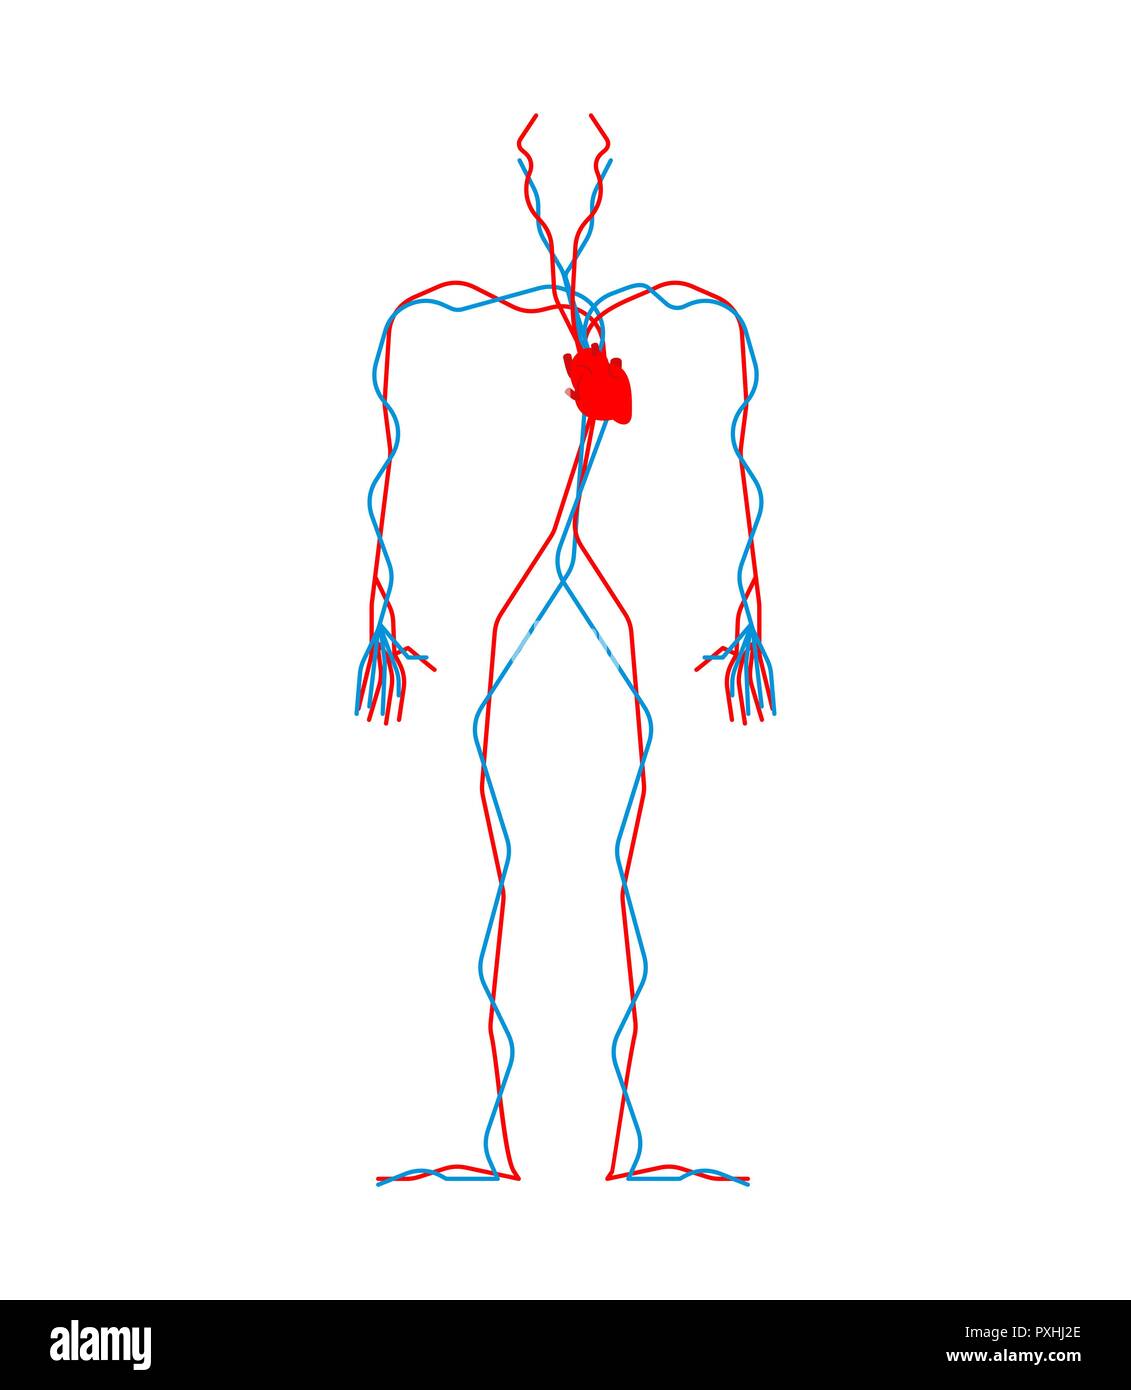 Human Anatomy Chart Organs